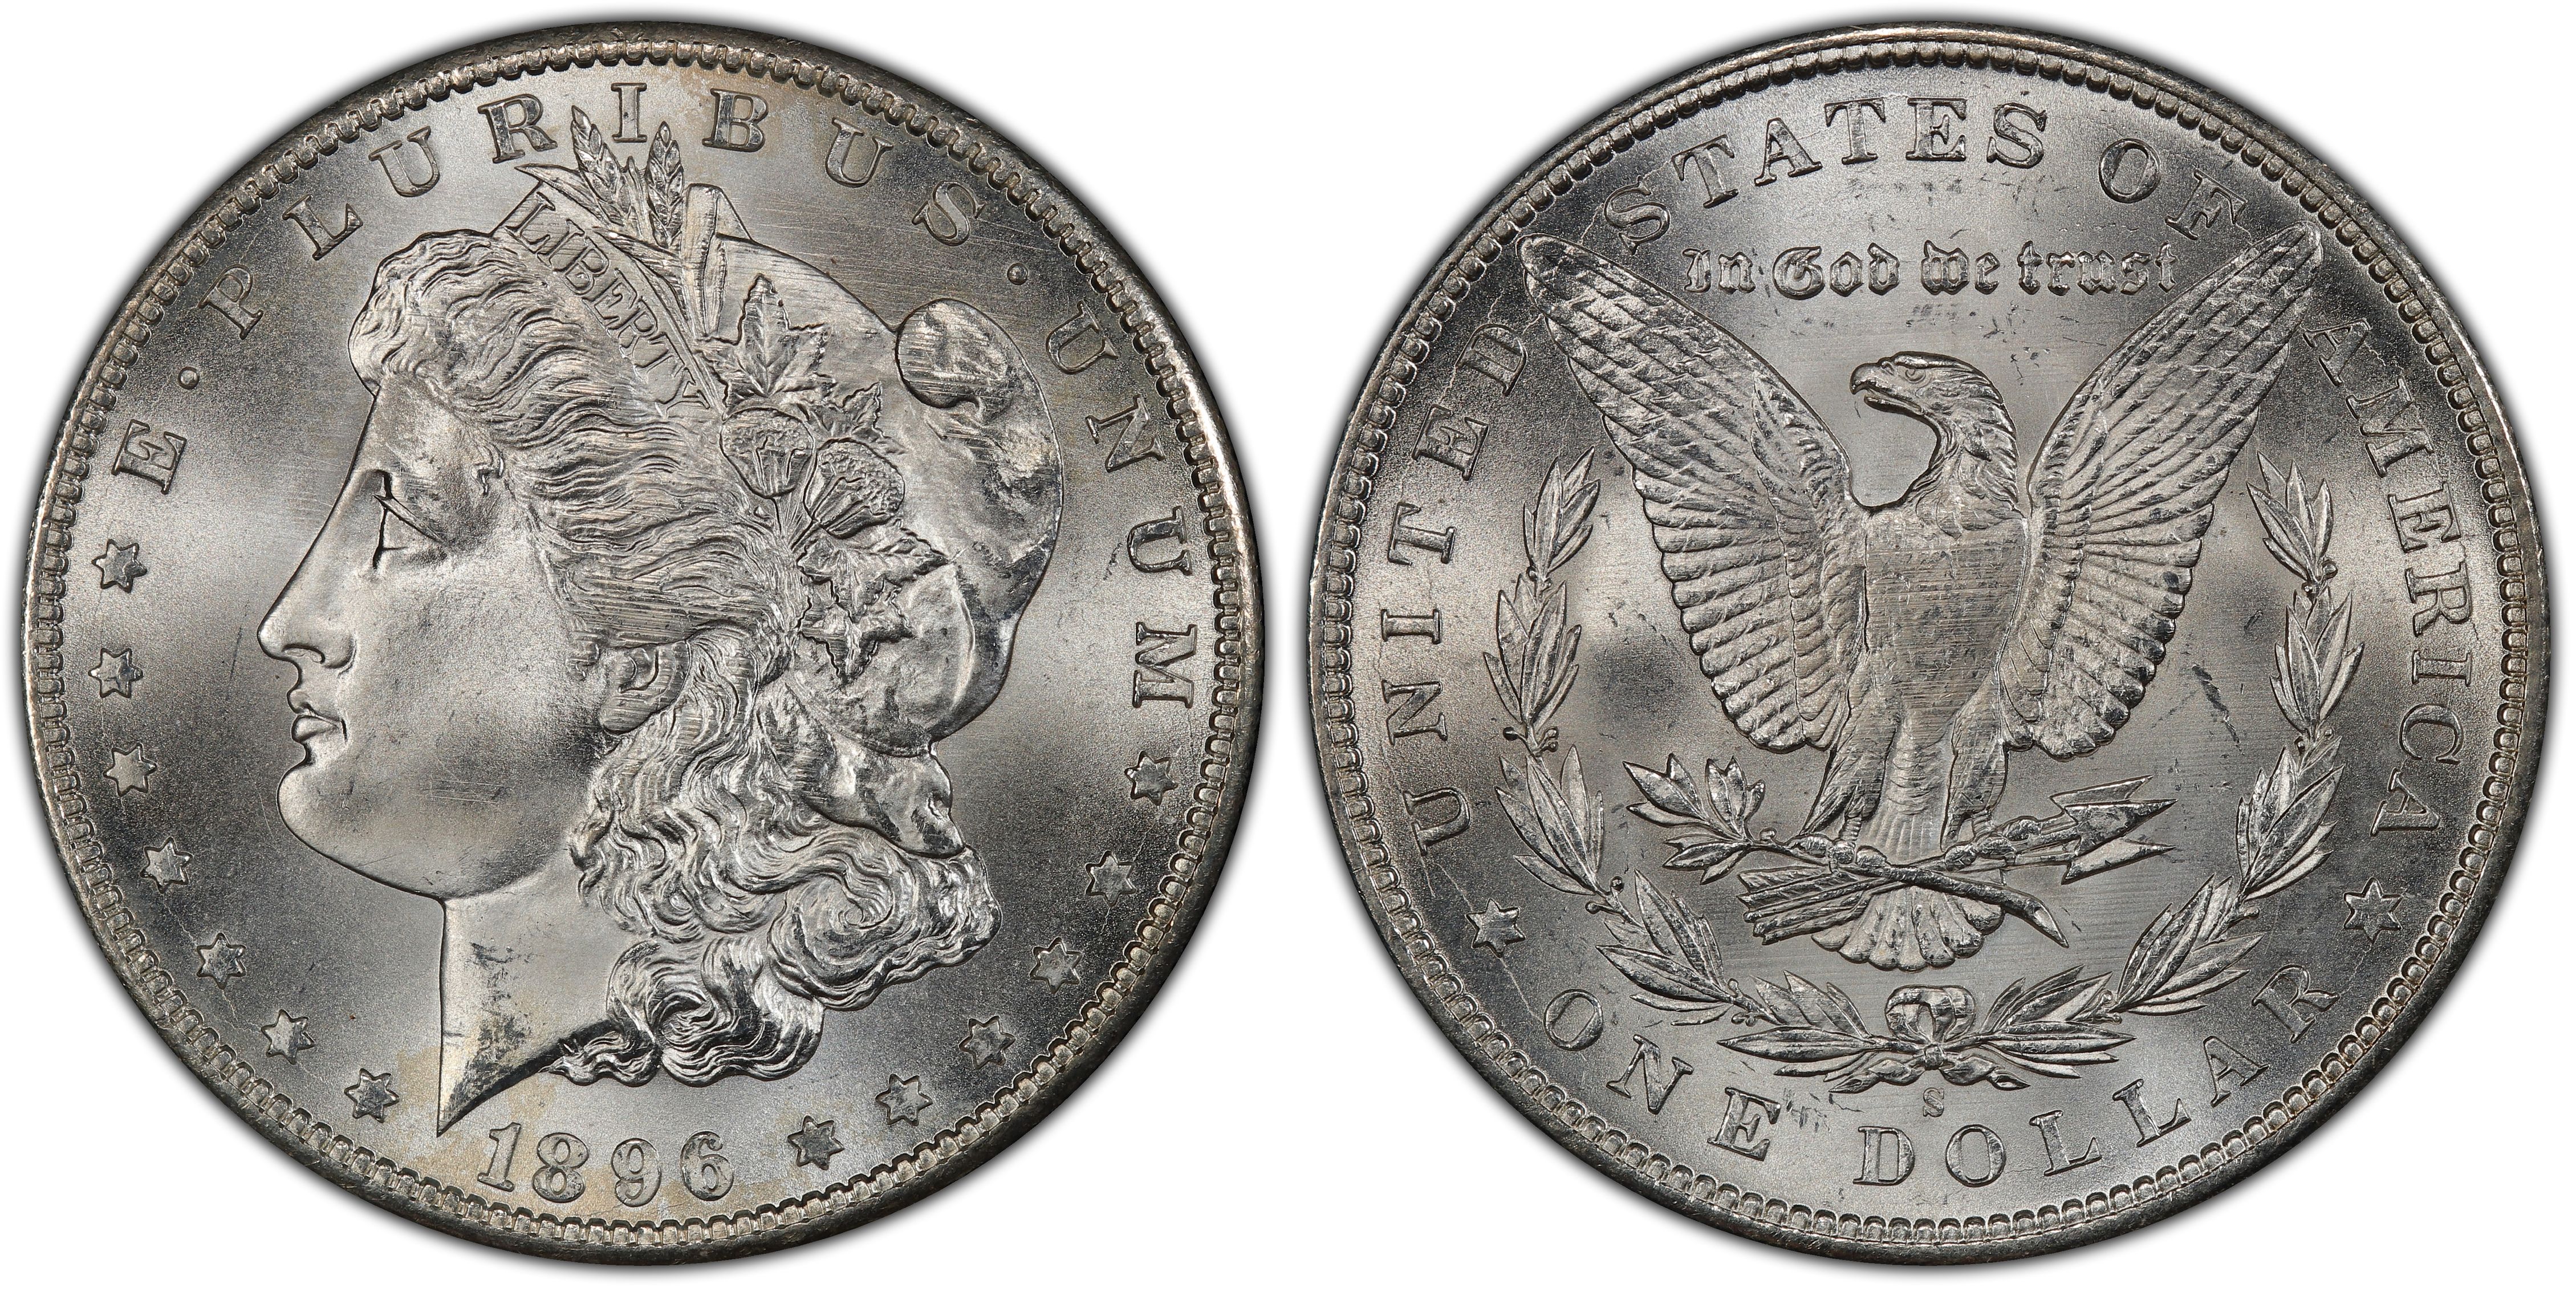 1896 S Morgan Silver Dollar $1 Average Circulated